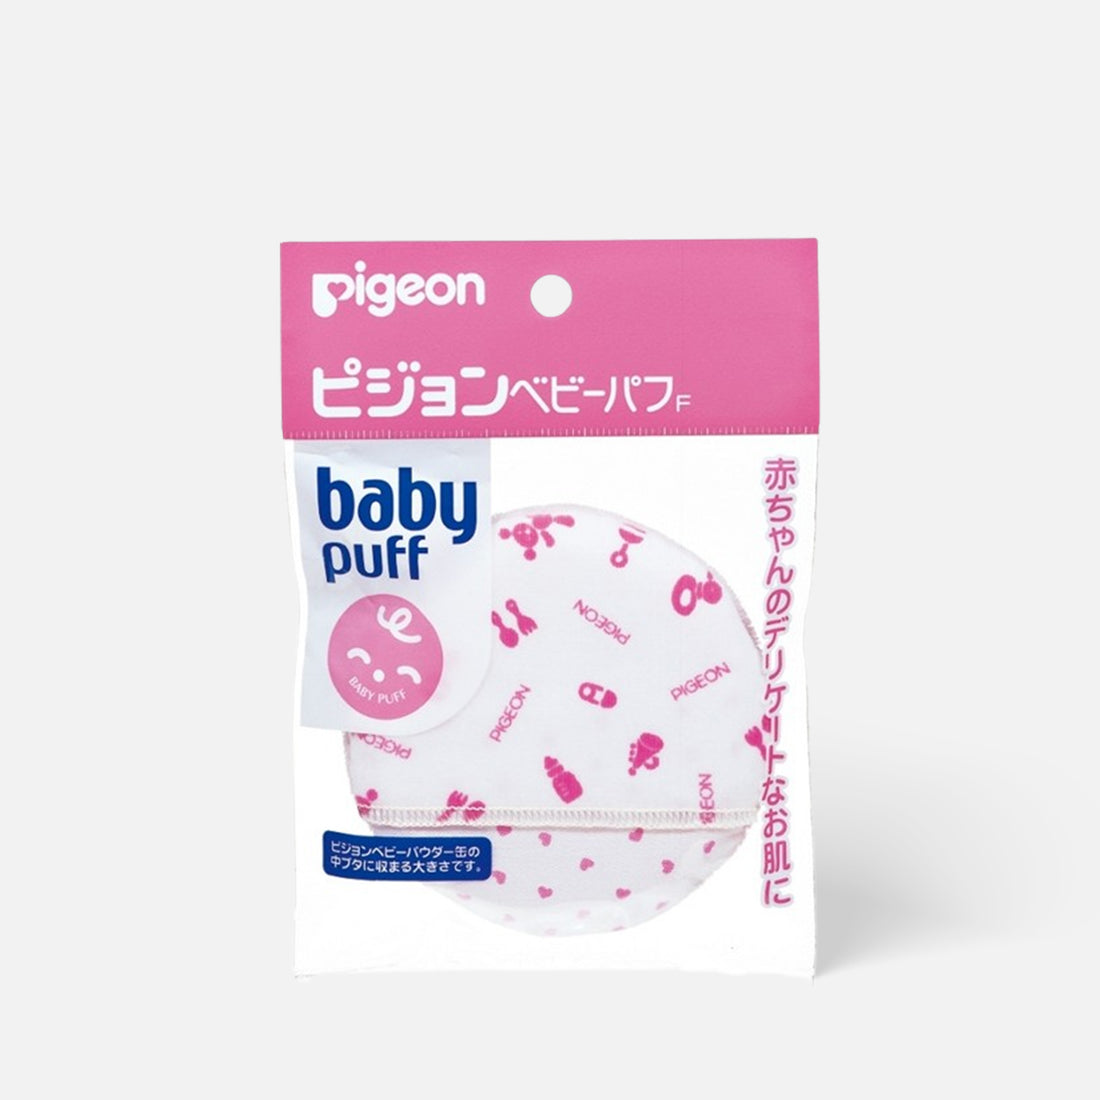 Pigeon Baby Soft Body Powder Puff